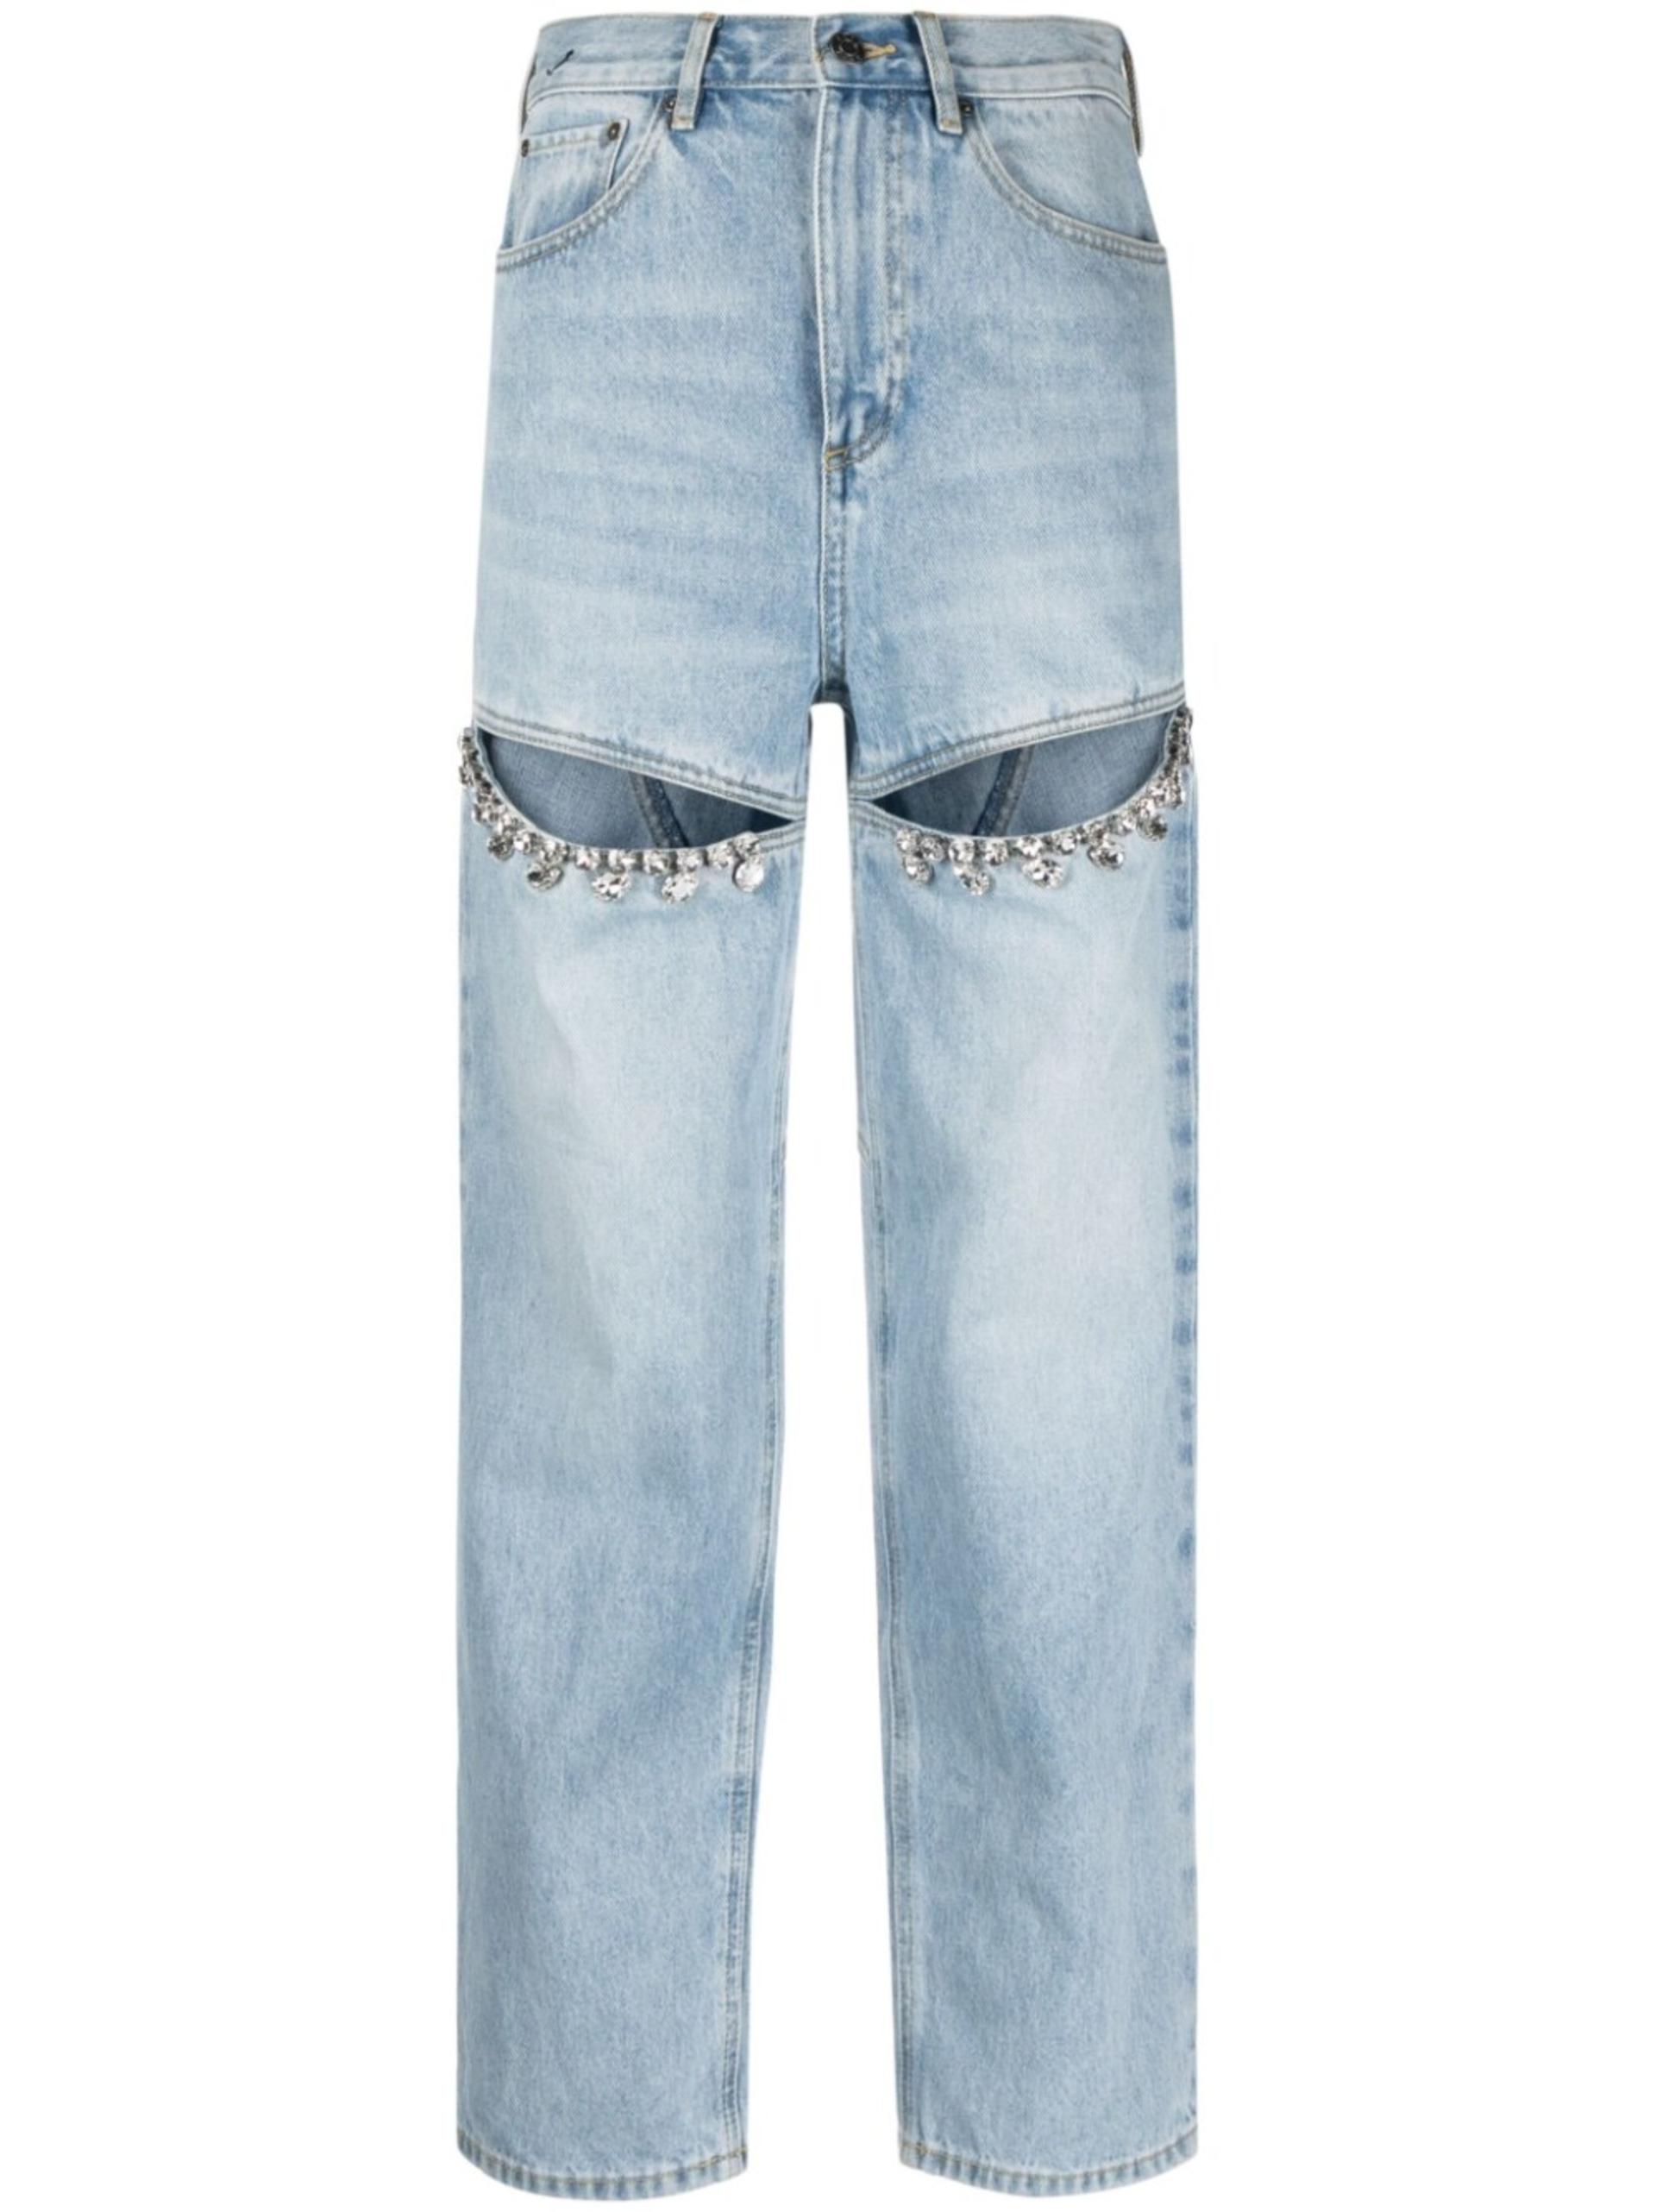 Straight High Jeans - Light denim blue - Ladies | H&M IN